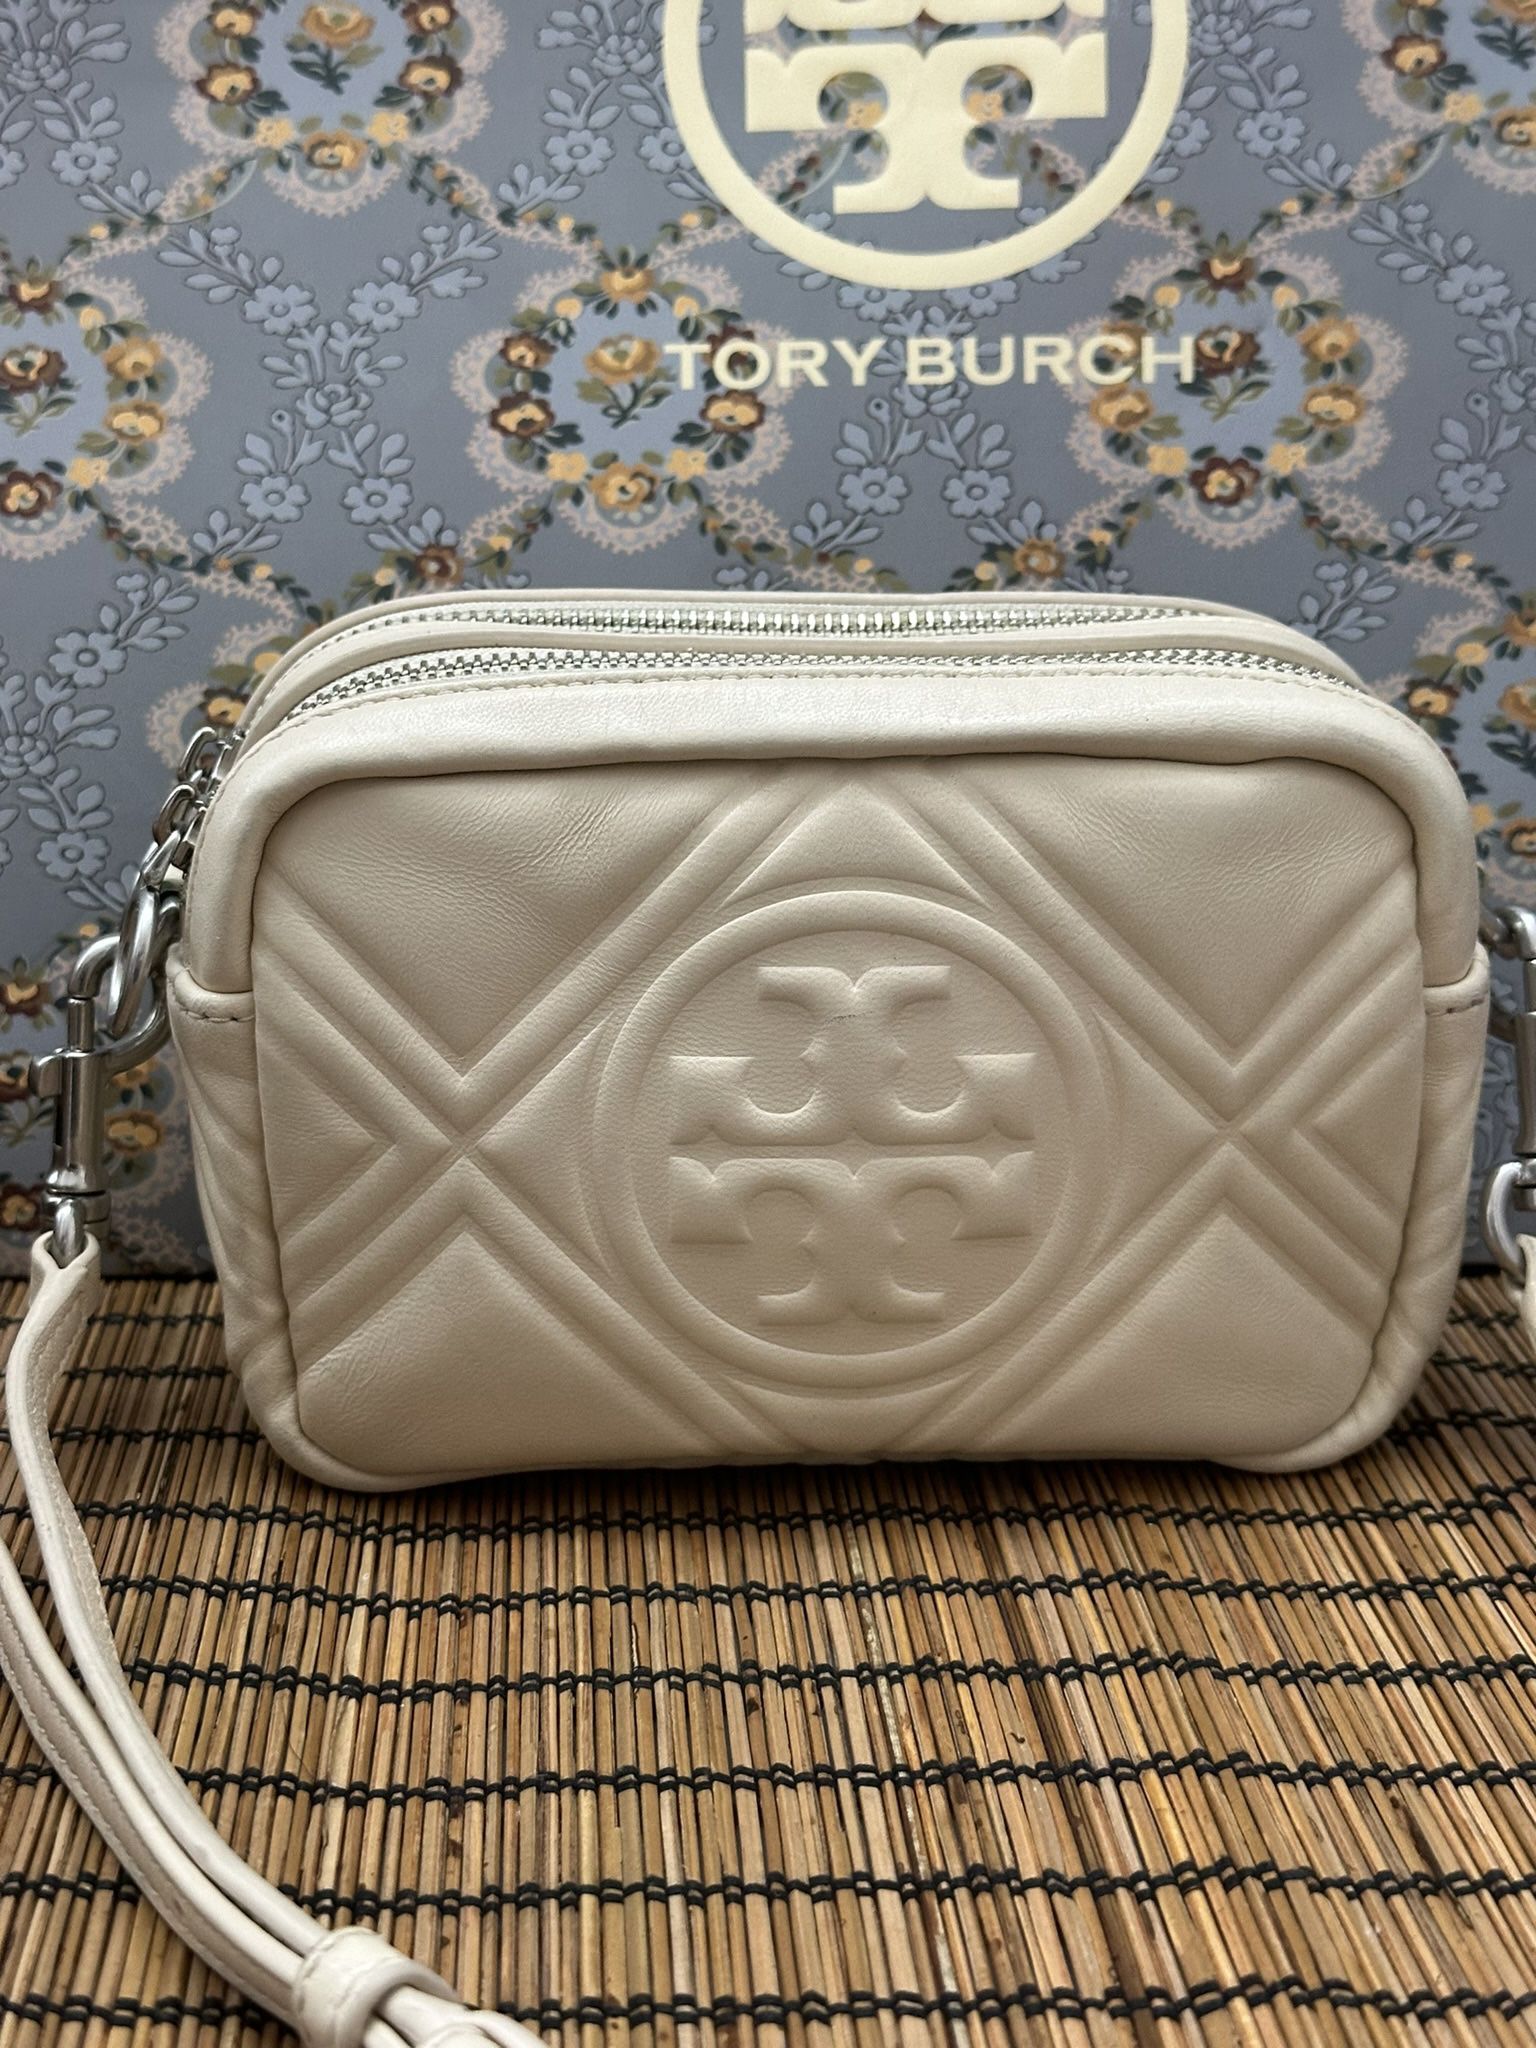 Tory Burch Mini Bag